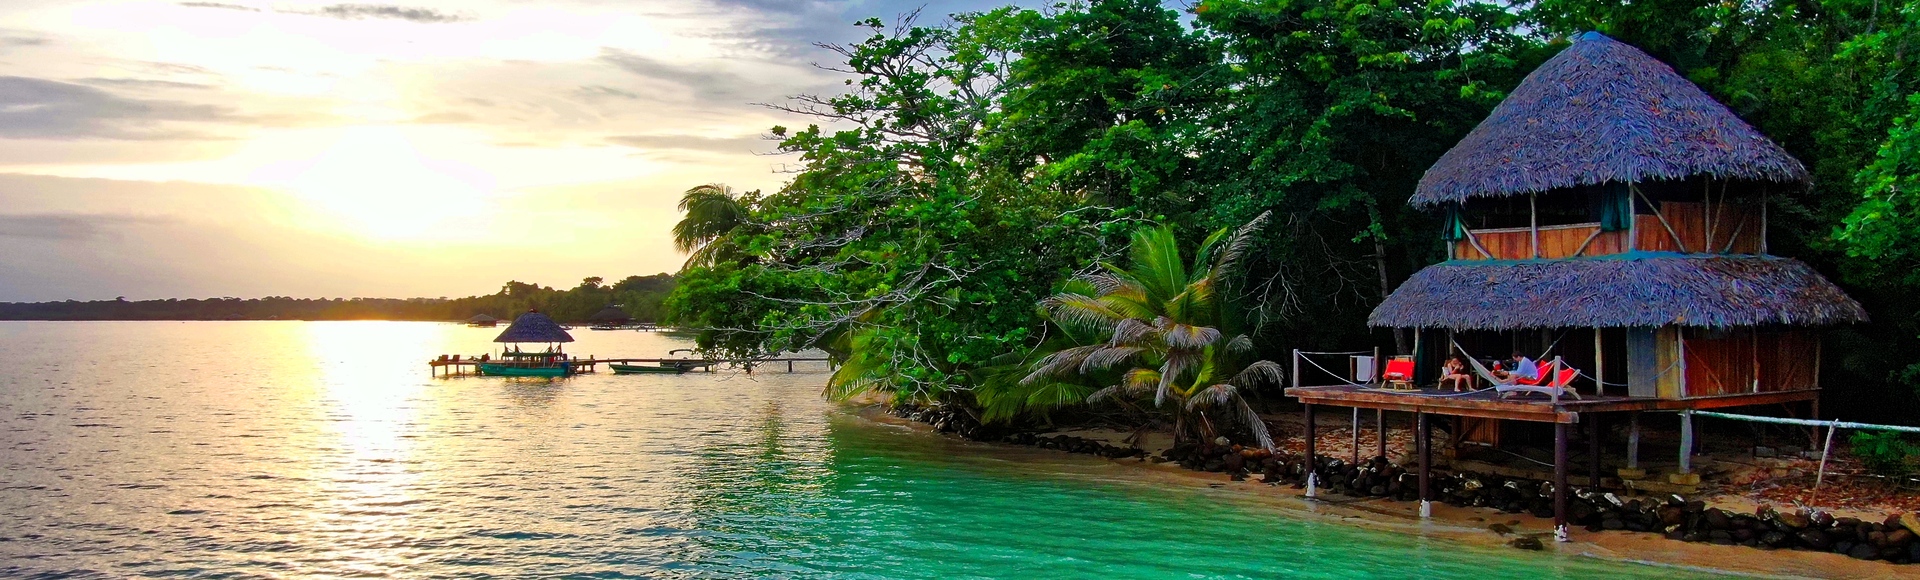 Hébergement au bord de mar - Isla Bastimentos - Panama - Destinations Latines